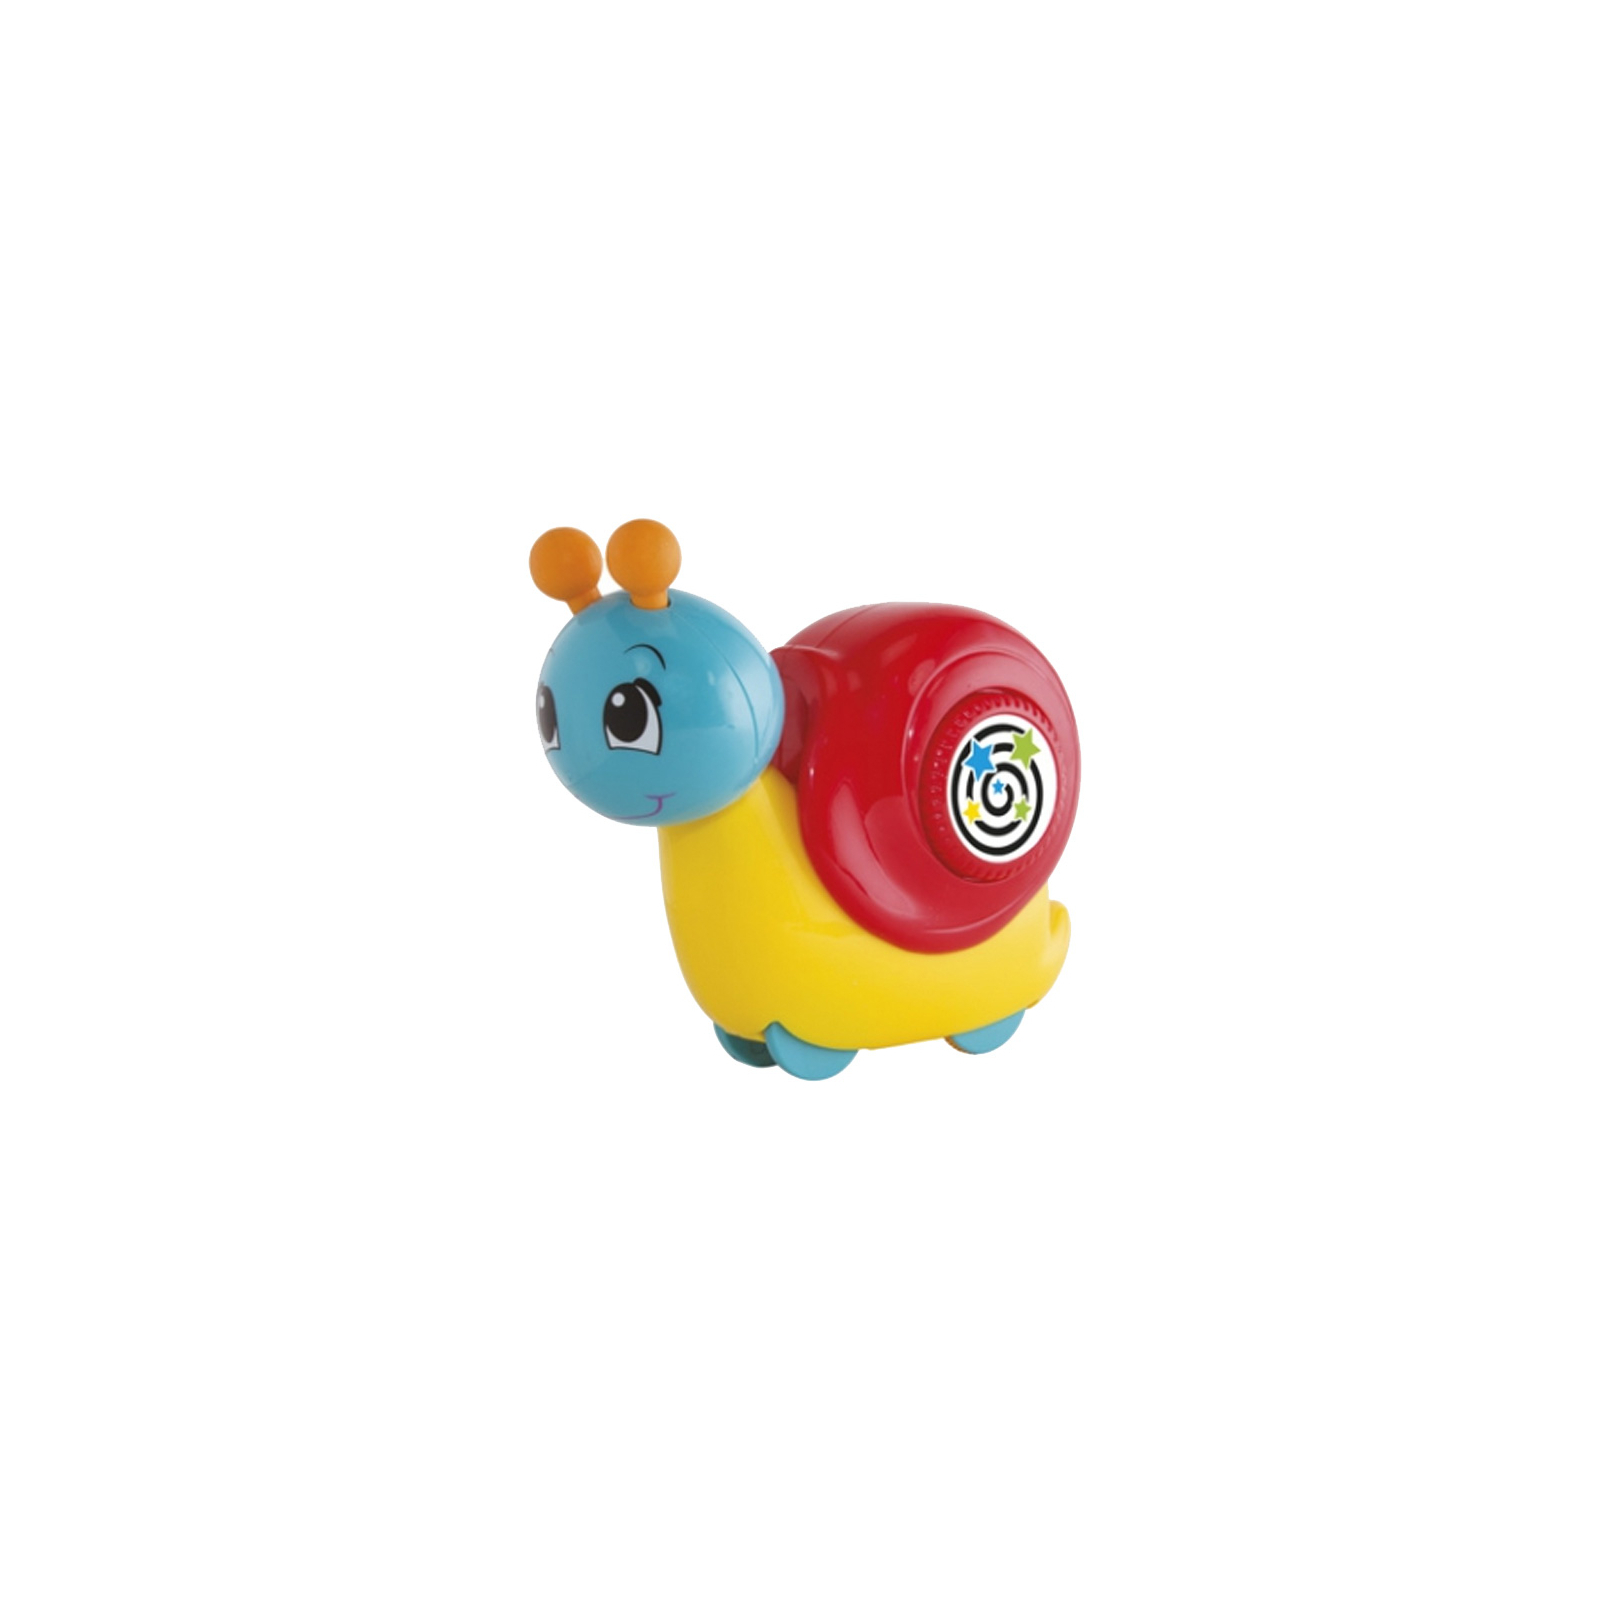 Развивающая игрушка Simba Веселая улитка 13 см (4010030)